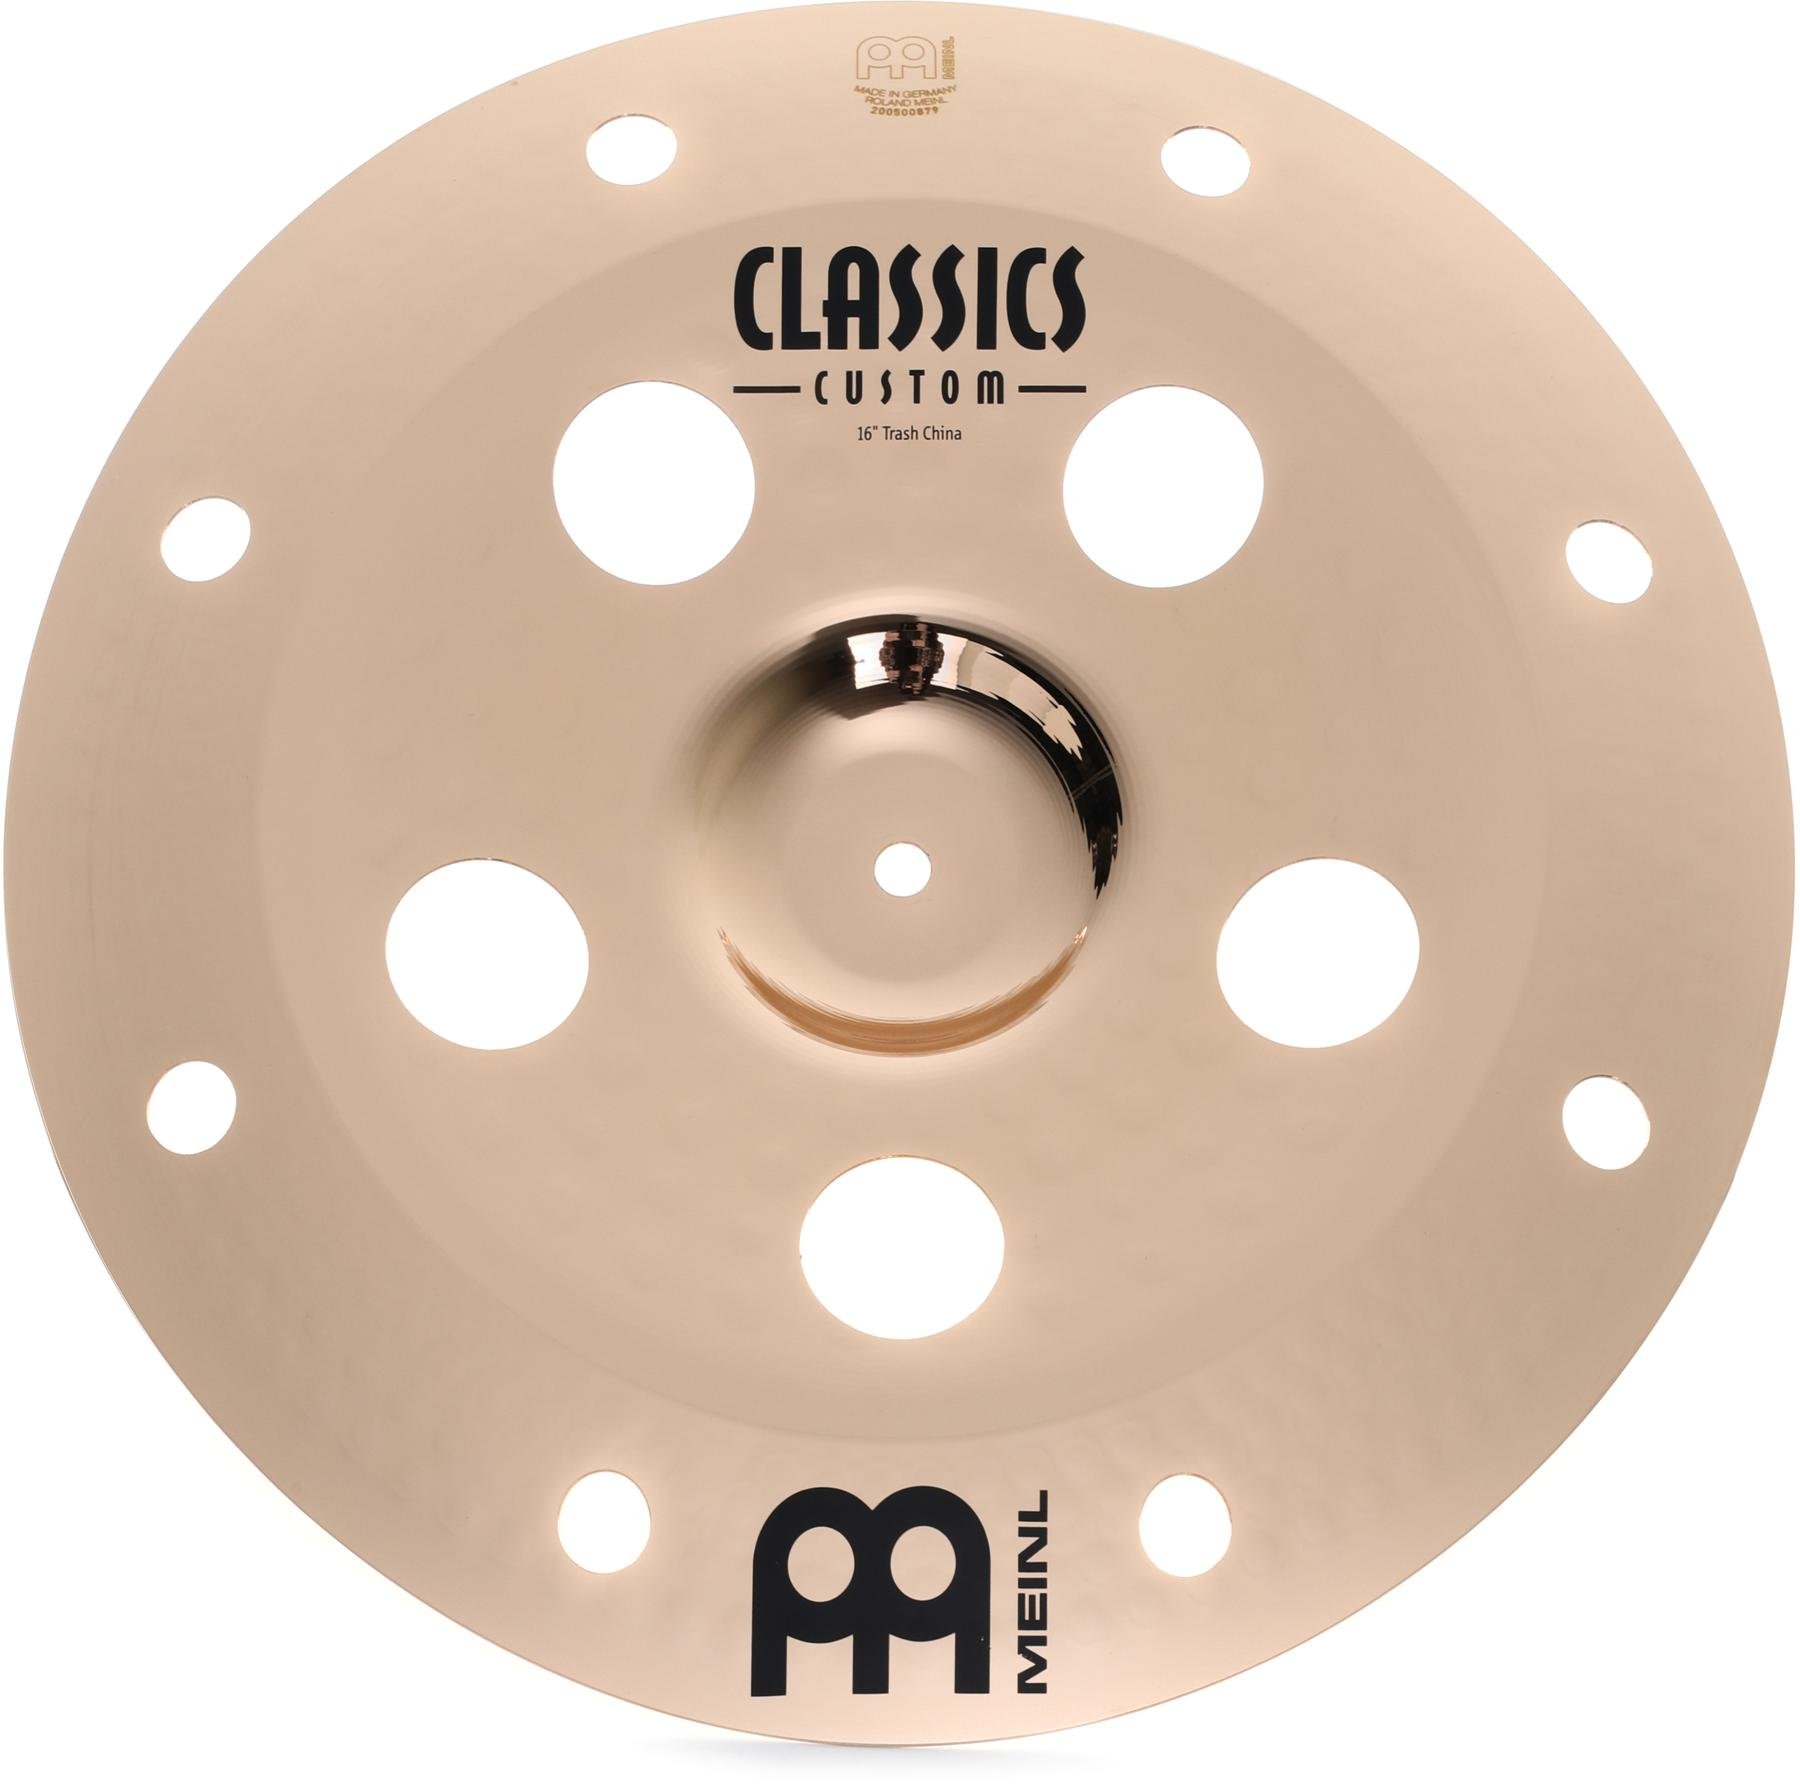 Meinl 16 Trash China Cymbal with Holes Classics Custom Brilliant 2-YEAR WARRANTY Made In Germany CC16TRCH-B 